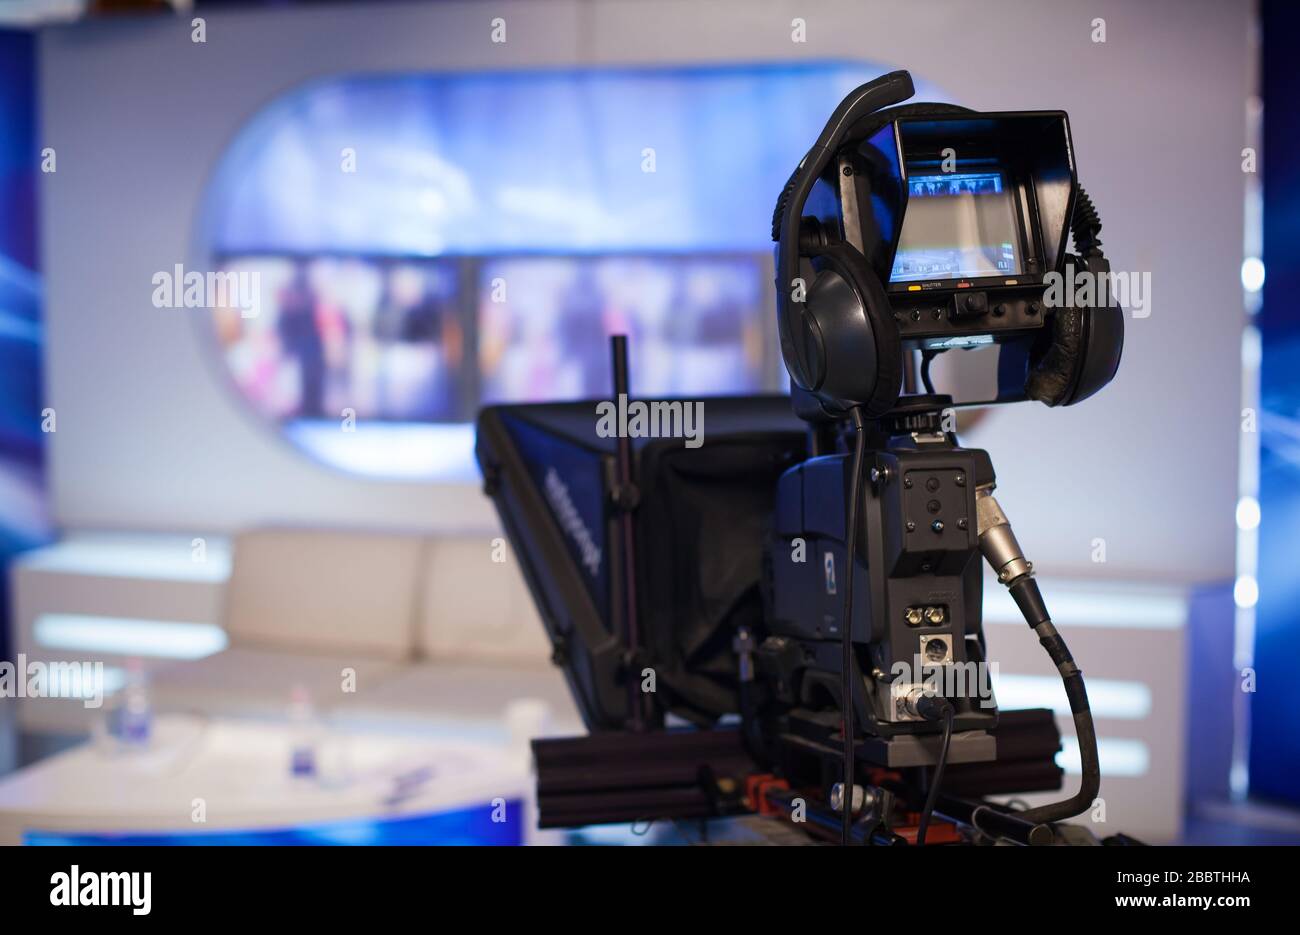 Video Kamera - Aufnahme Show im TV-Studio - Fokus auf Kamera Stockfoto